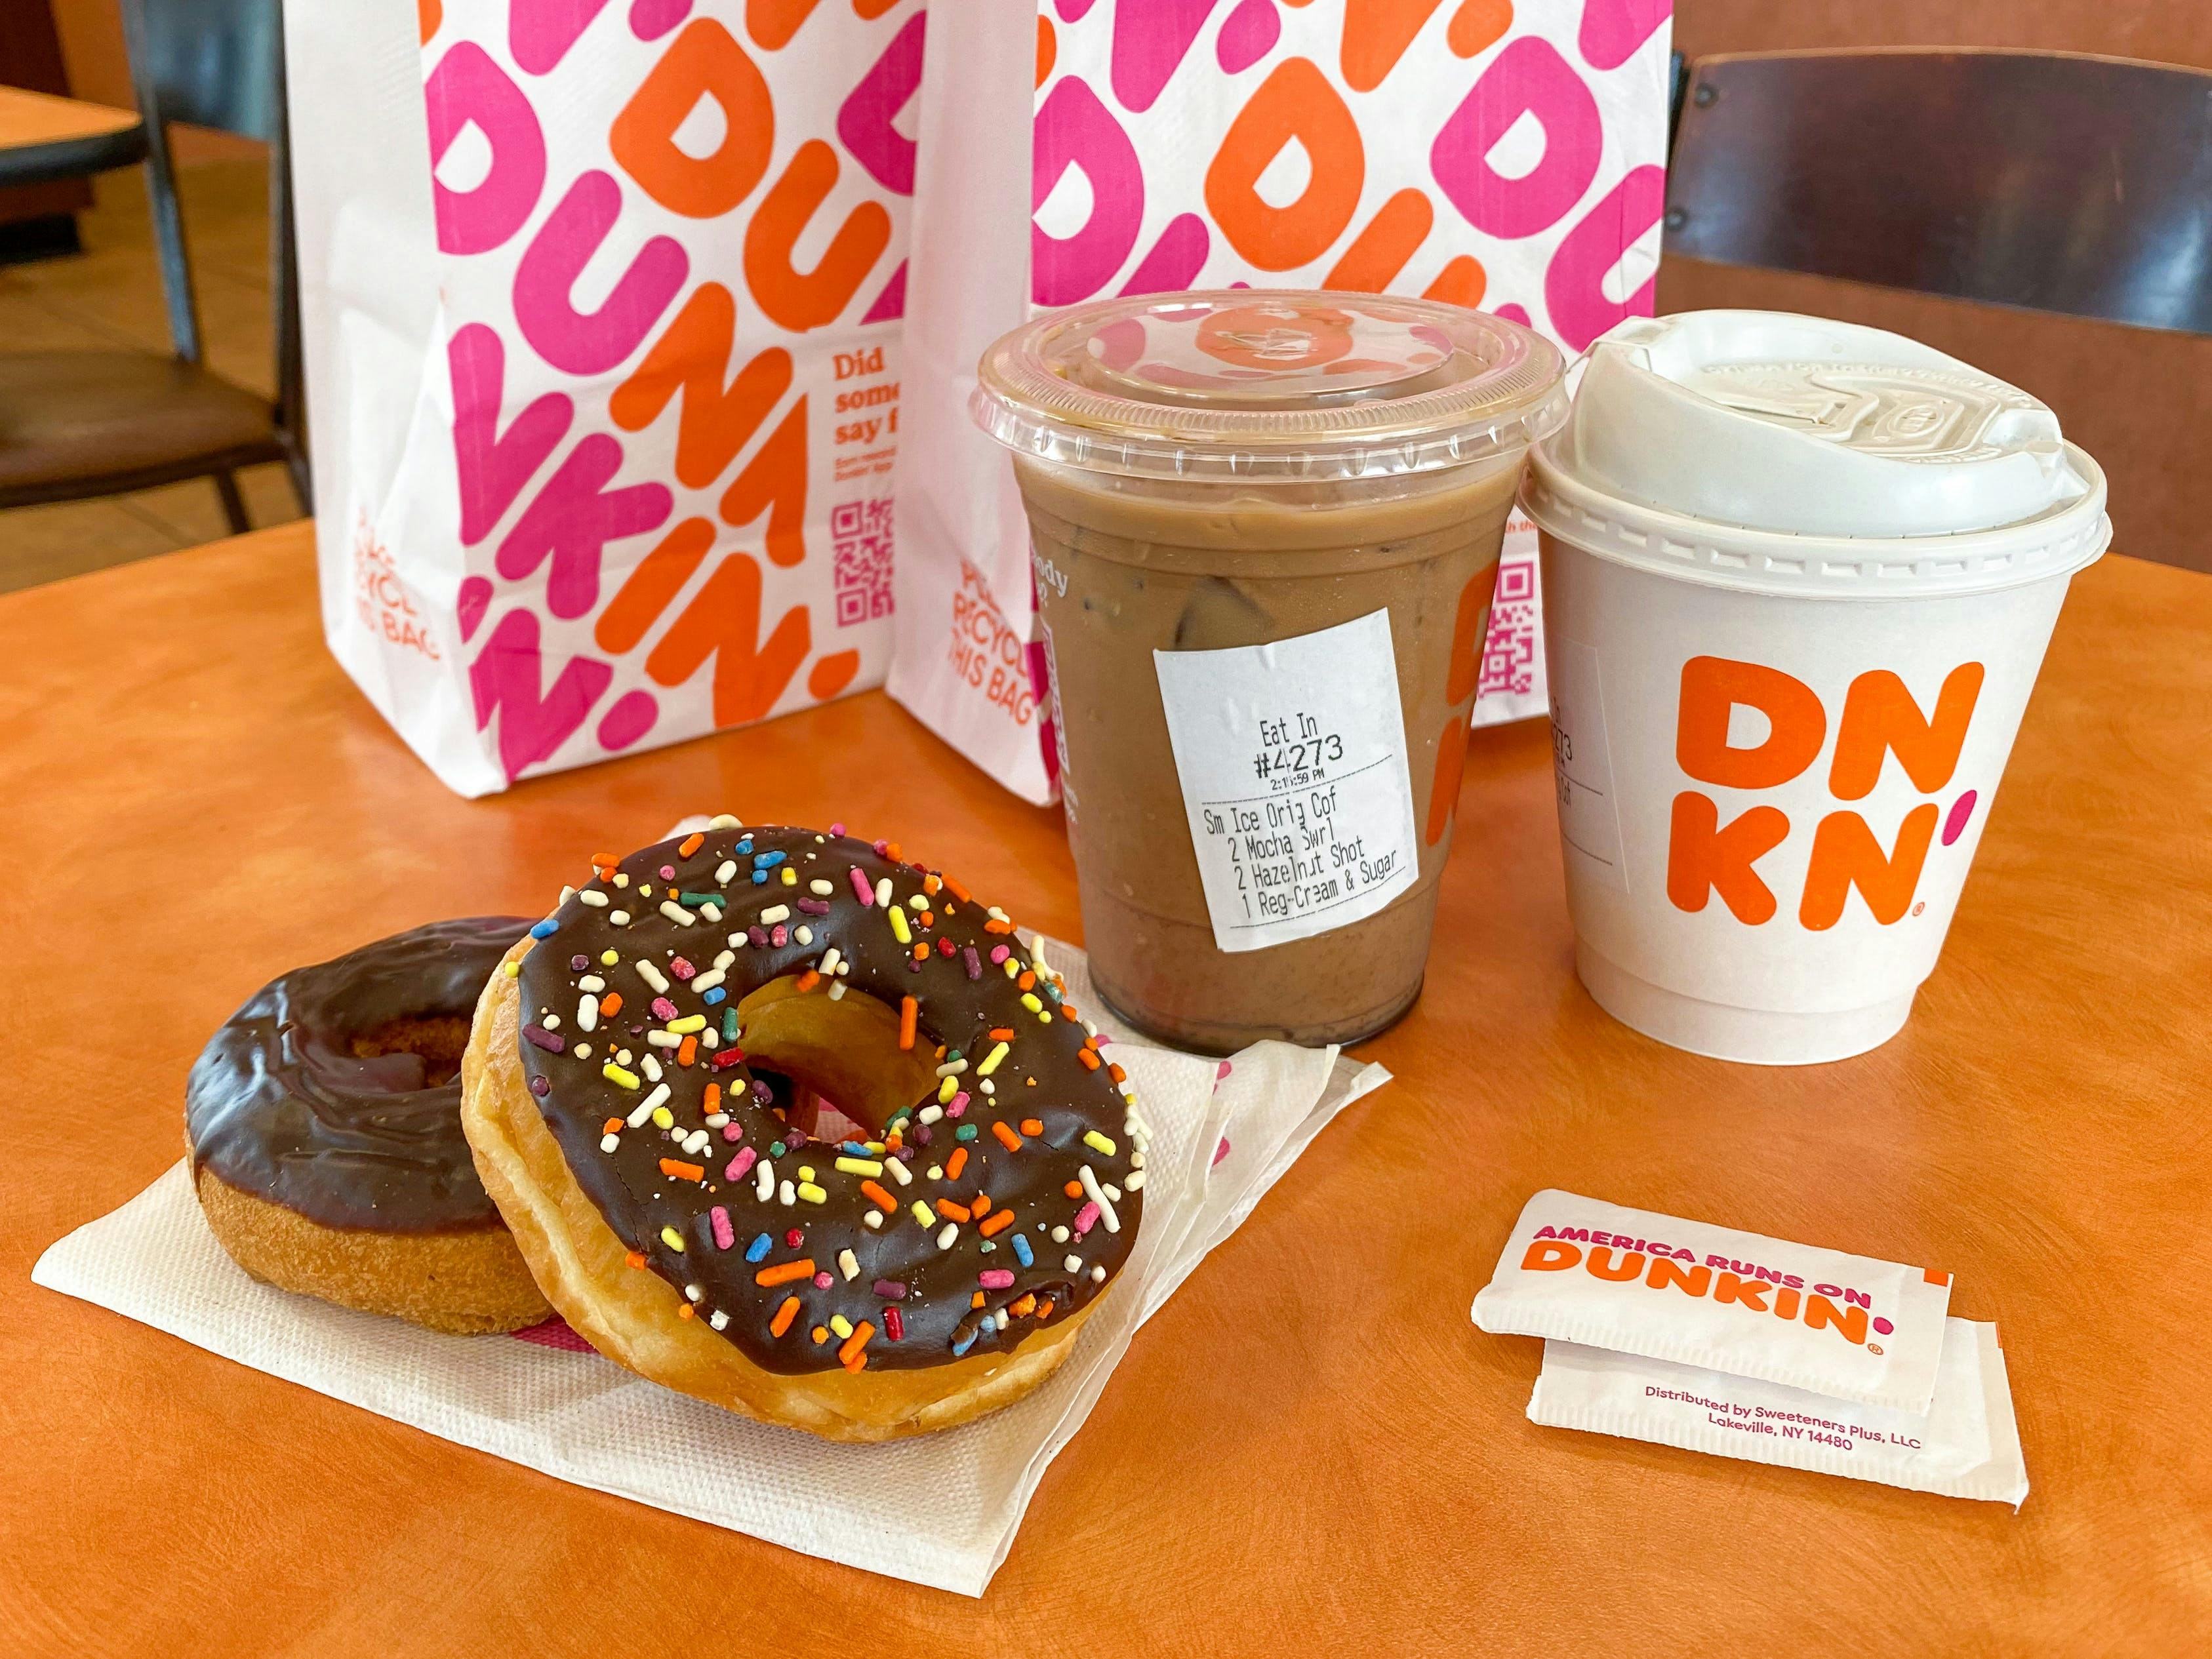 dunkin-donuts-iced-coffee-bag-cake-donuts-sprinkles-2022-1657206064-1657206065.jpeg